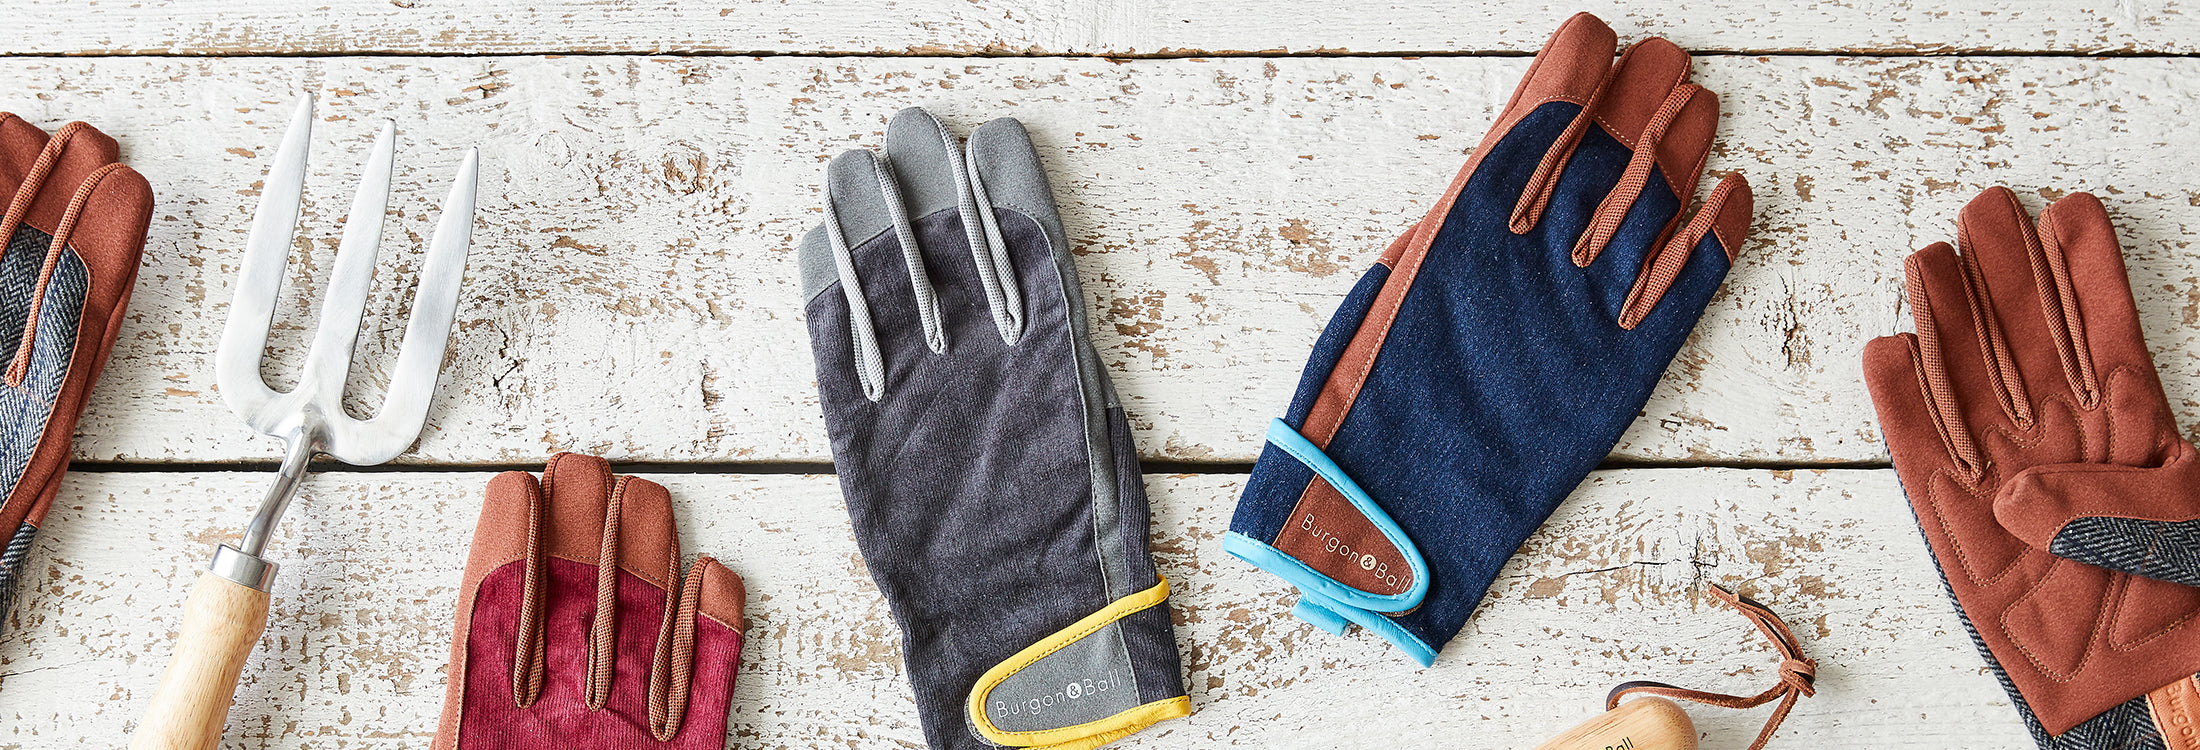 Trade Men's Gardening Gloves